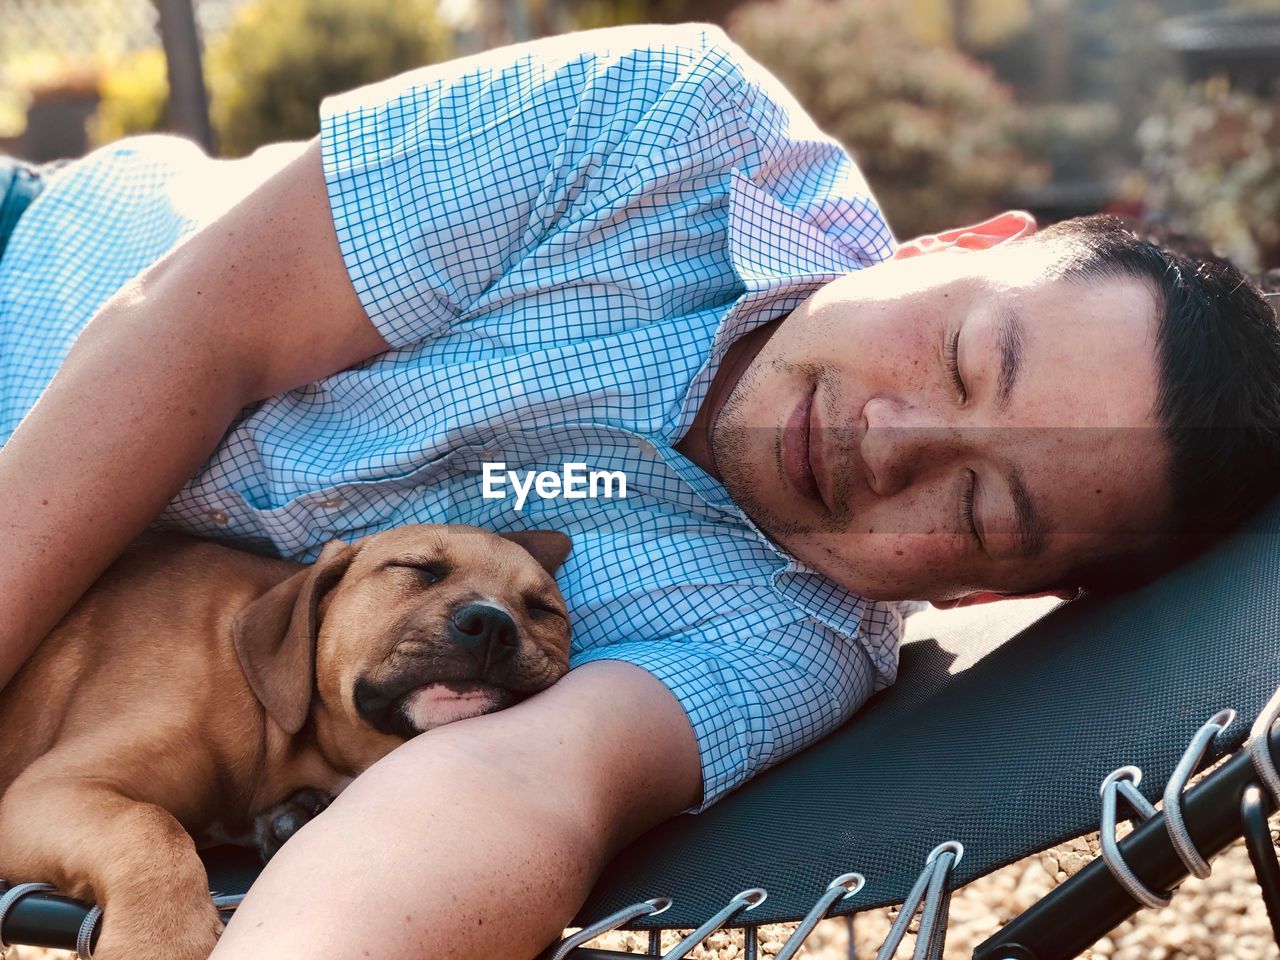 Man sleeping with dog